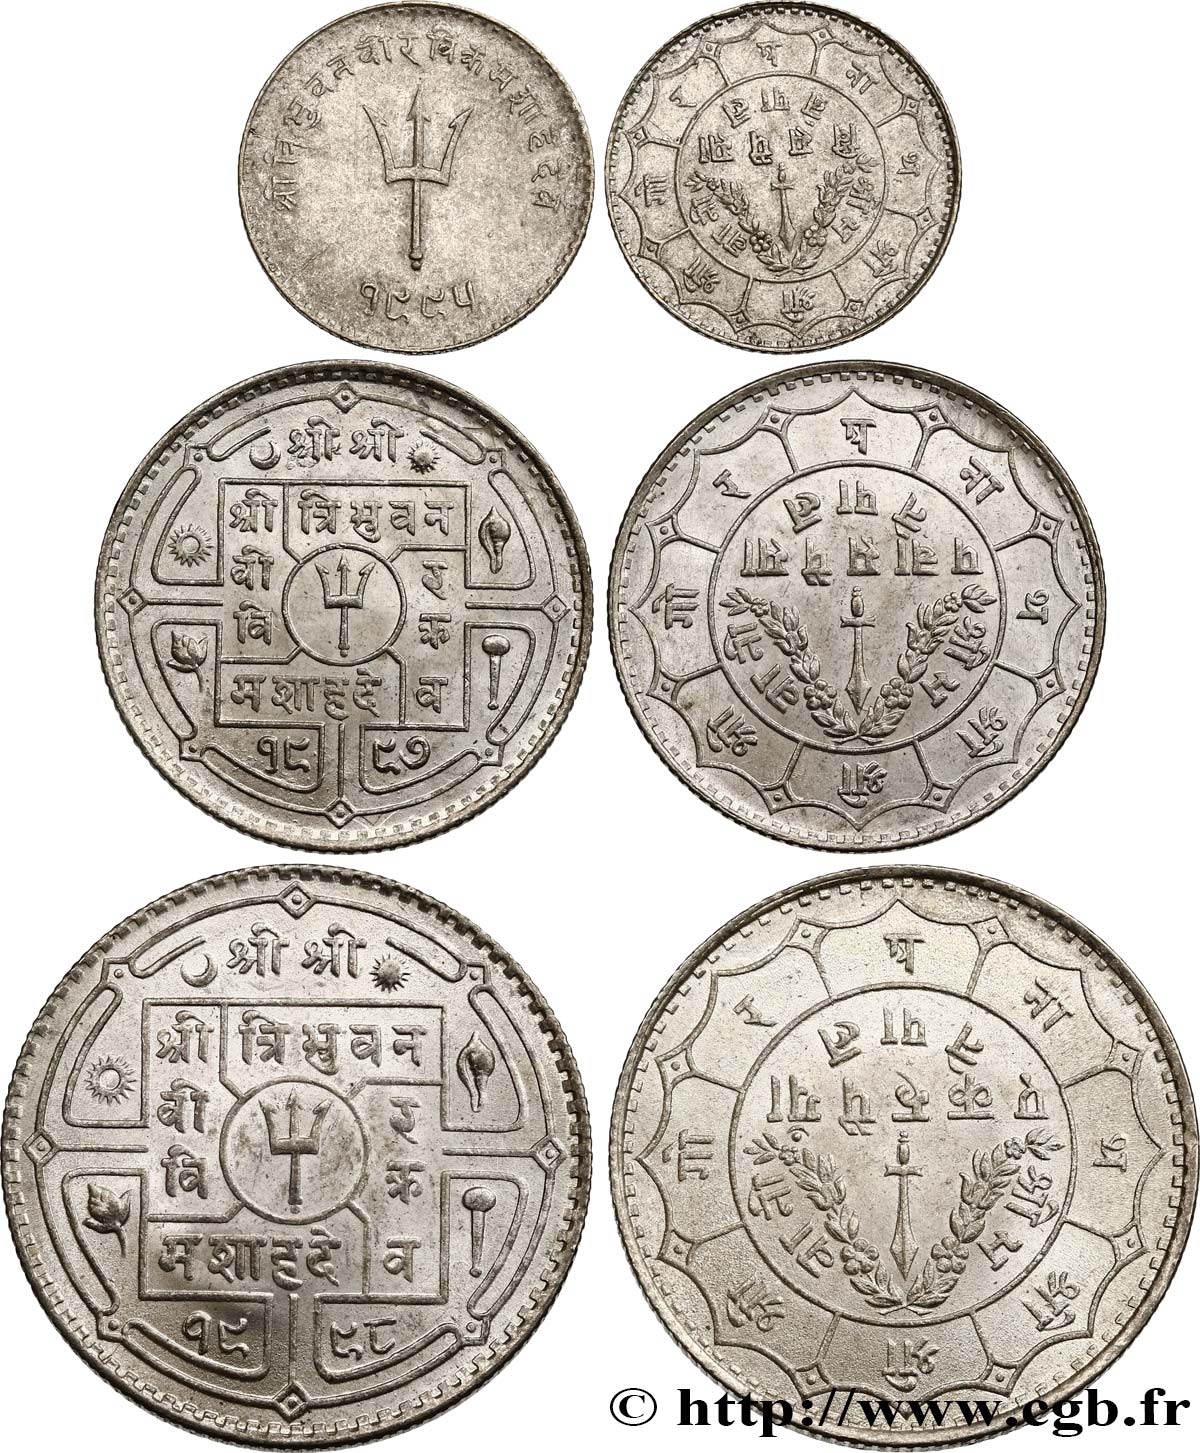 ROYAUME DU NÉPAL - TRIBHUVANA BIR BIKRAM Lot de 3 monnaies : Rupee, 50 Paisa et 20 Paisa n.d.  MS 